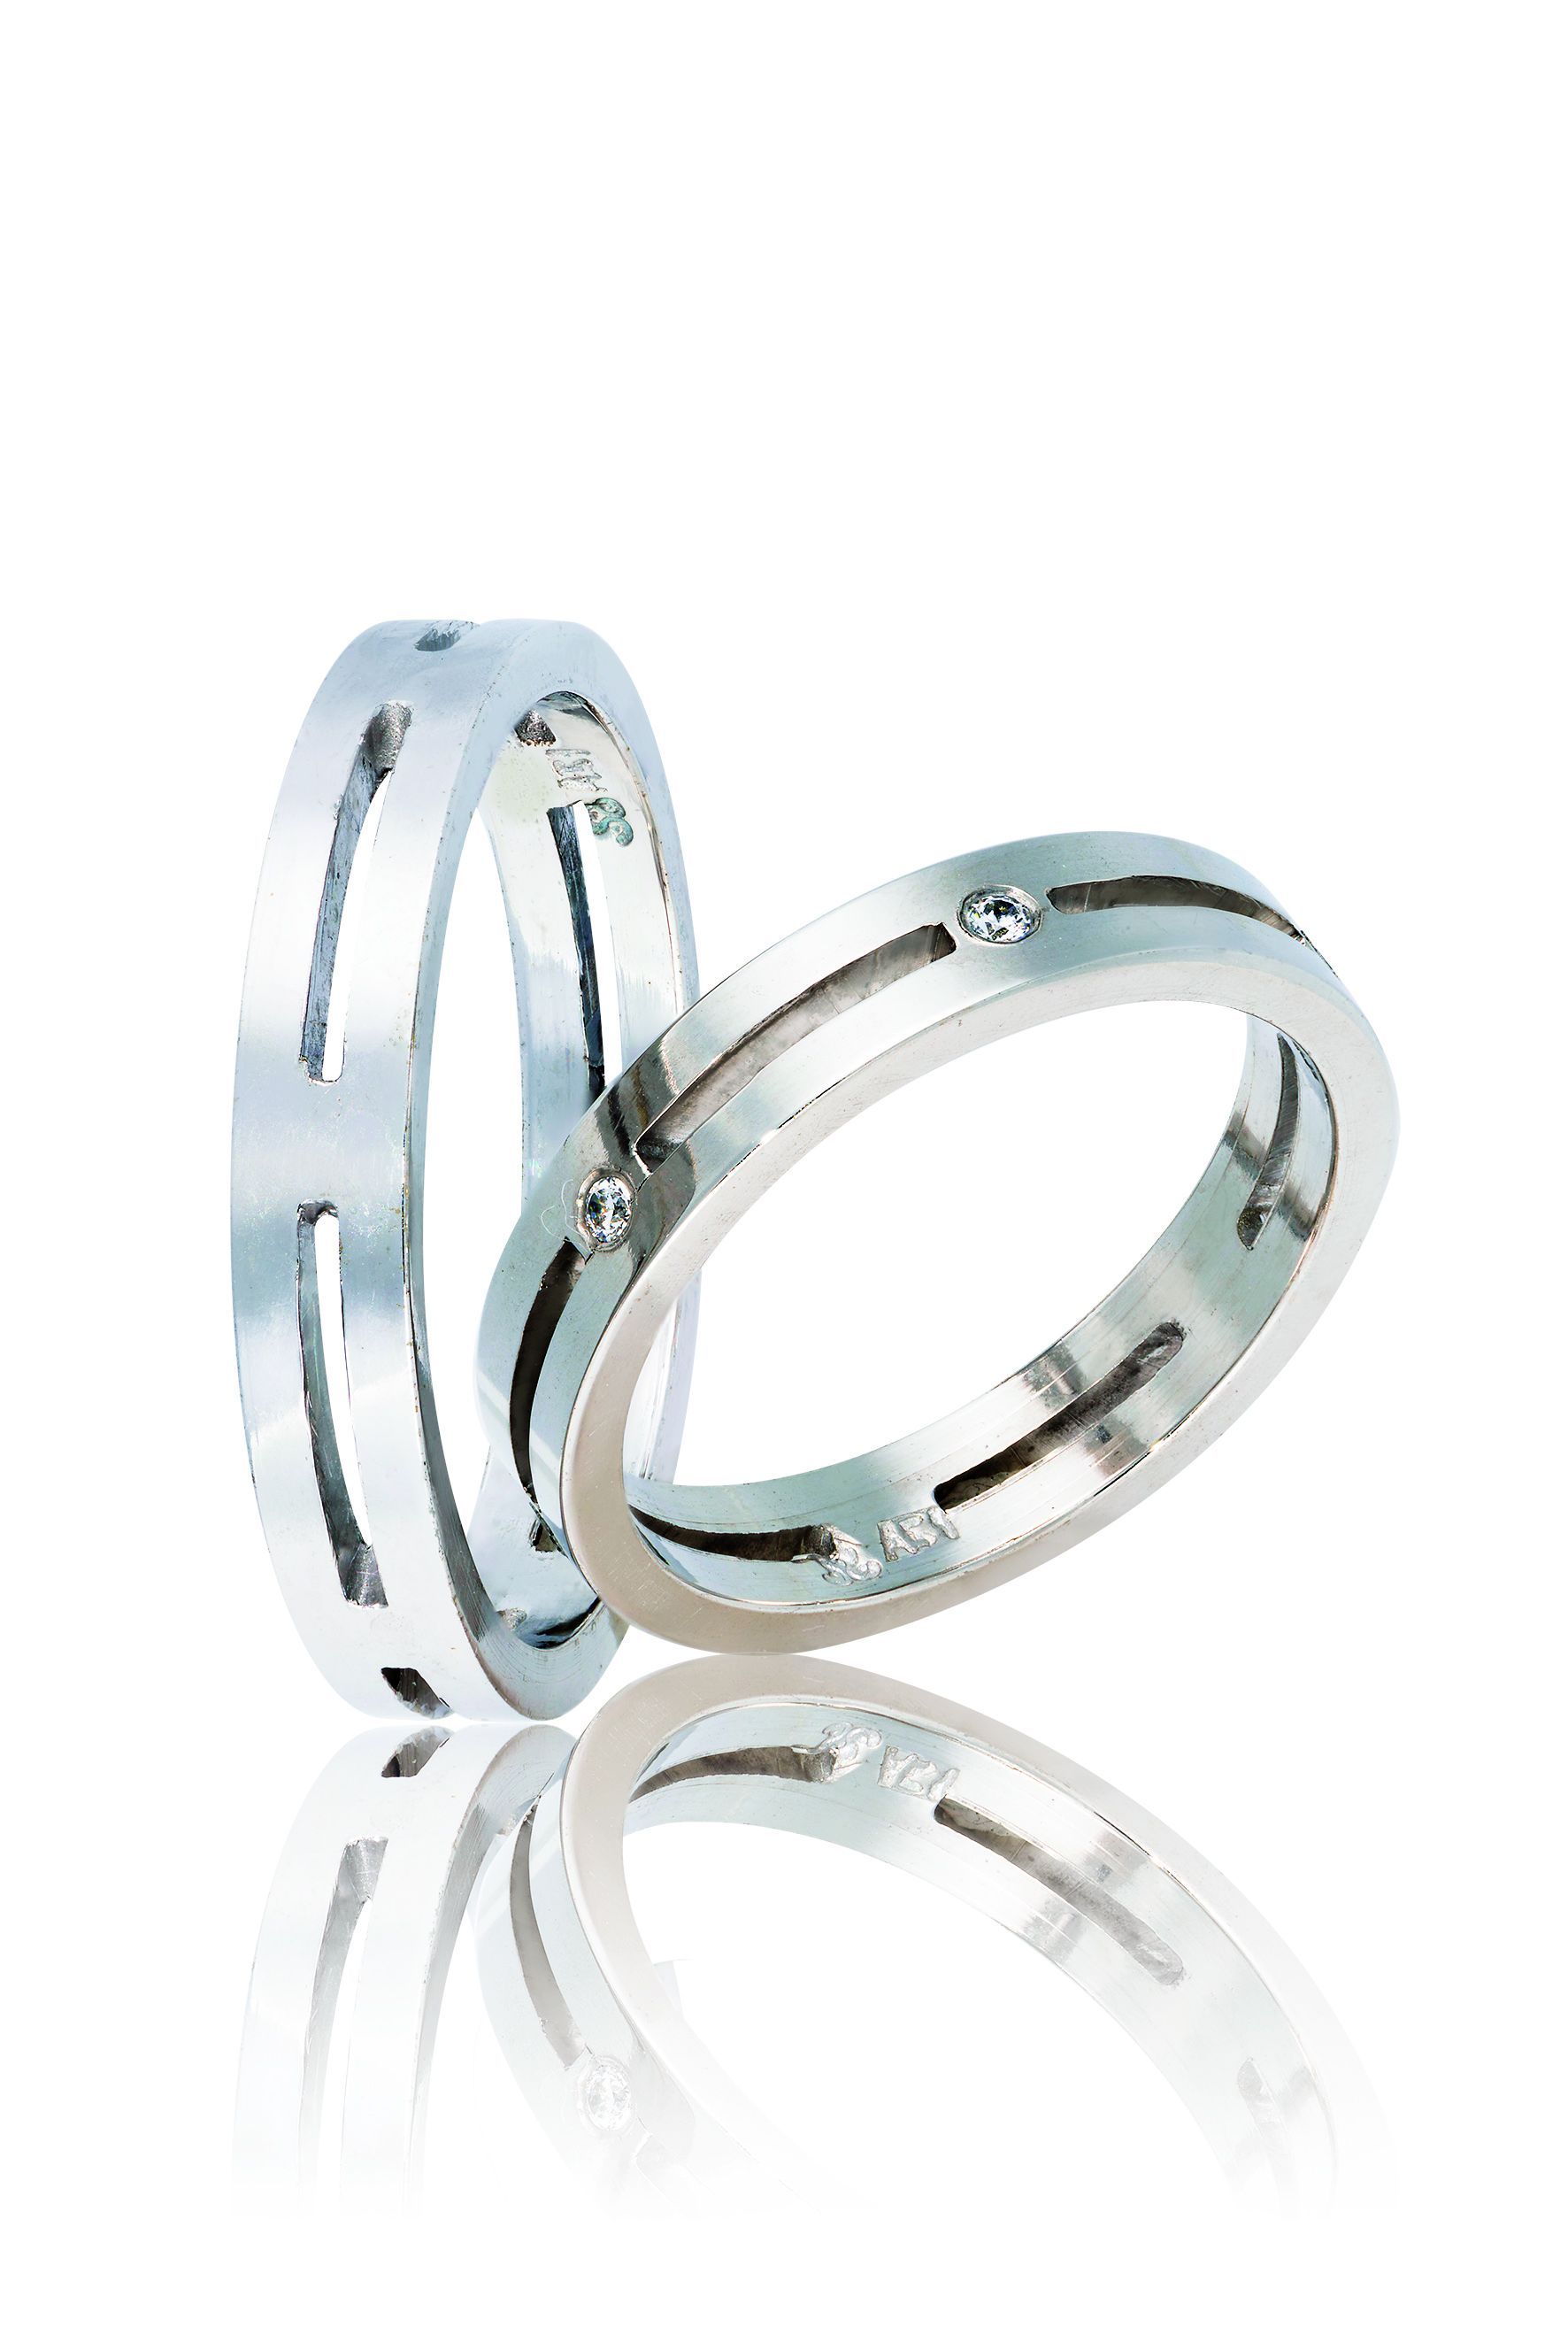 White gold wedding rings 4mm (code 5w)